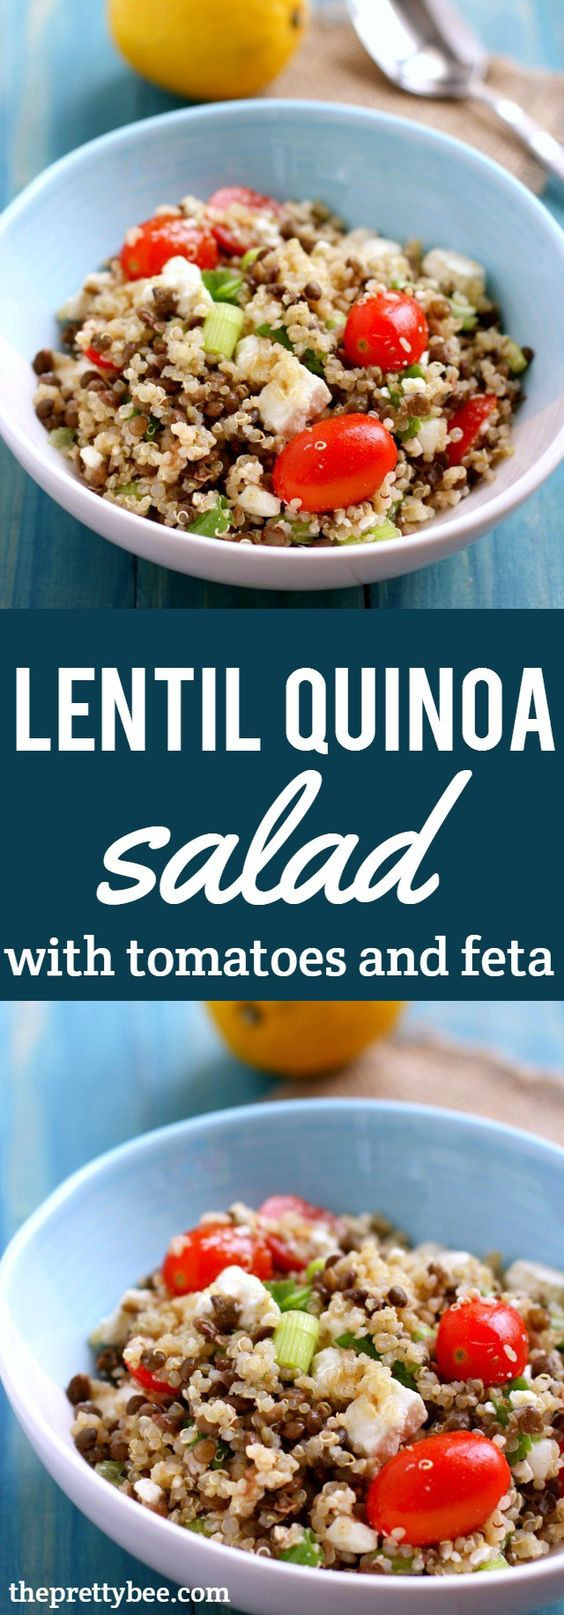 Gluten Free Side Dishes Summer
 Lentil Quinoa Summer Salad Recipe